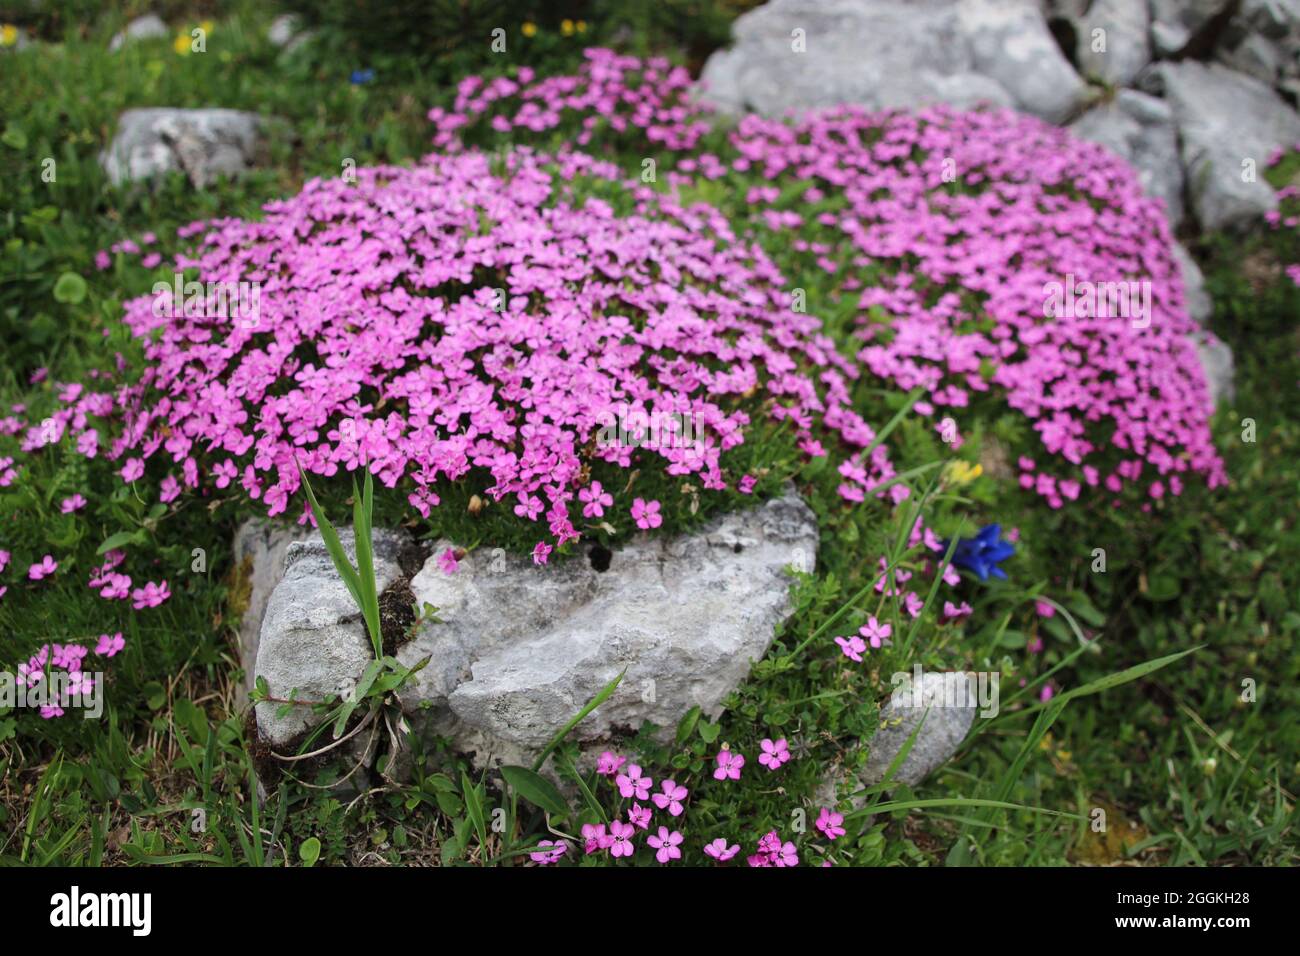 Impressionante prato di fiori alpini con chiodi di garofano o mosca senza stelo (Silene acaulis), Monti Karwendel, Tirolo, Austria Foto Stock